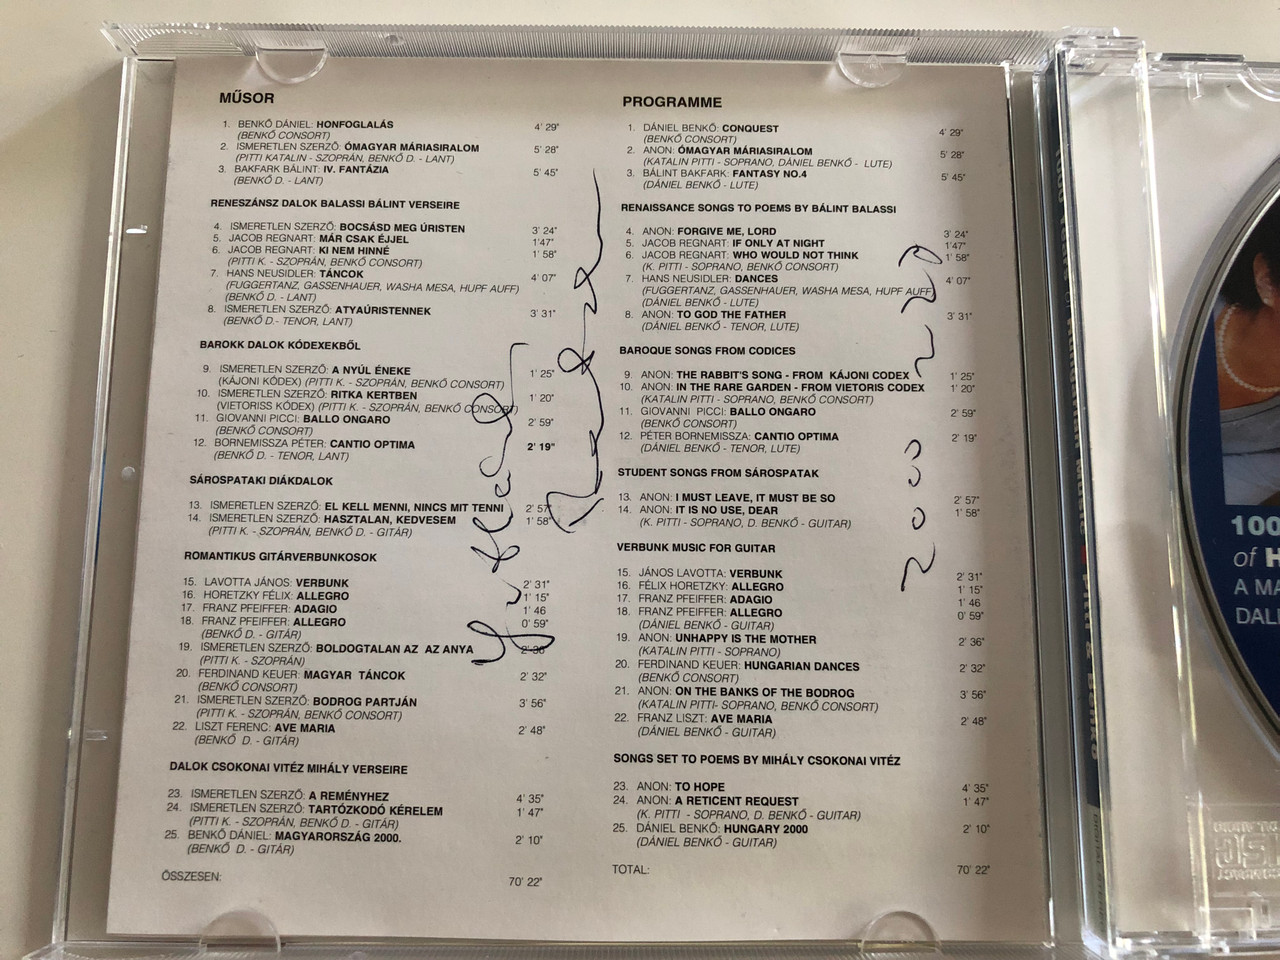 1000 Years of Hungarian Music / Katalin Pitti soprano, Dániel Benkő lute,  guitar / A magyar zene 1000 éve dalban, lanttal és gitárral / CÉH CCD 0627  / Audio CD 2000 - bibleinmylanguage